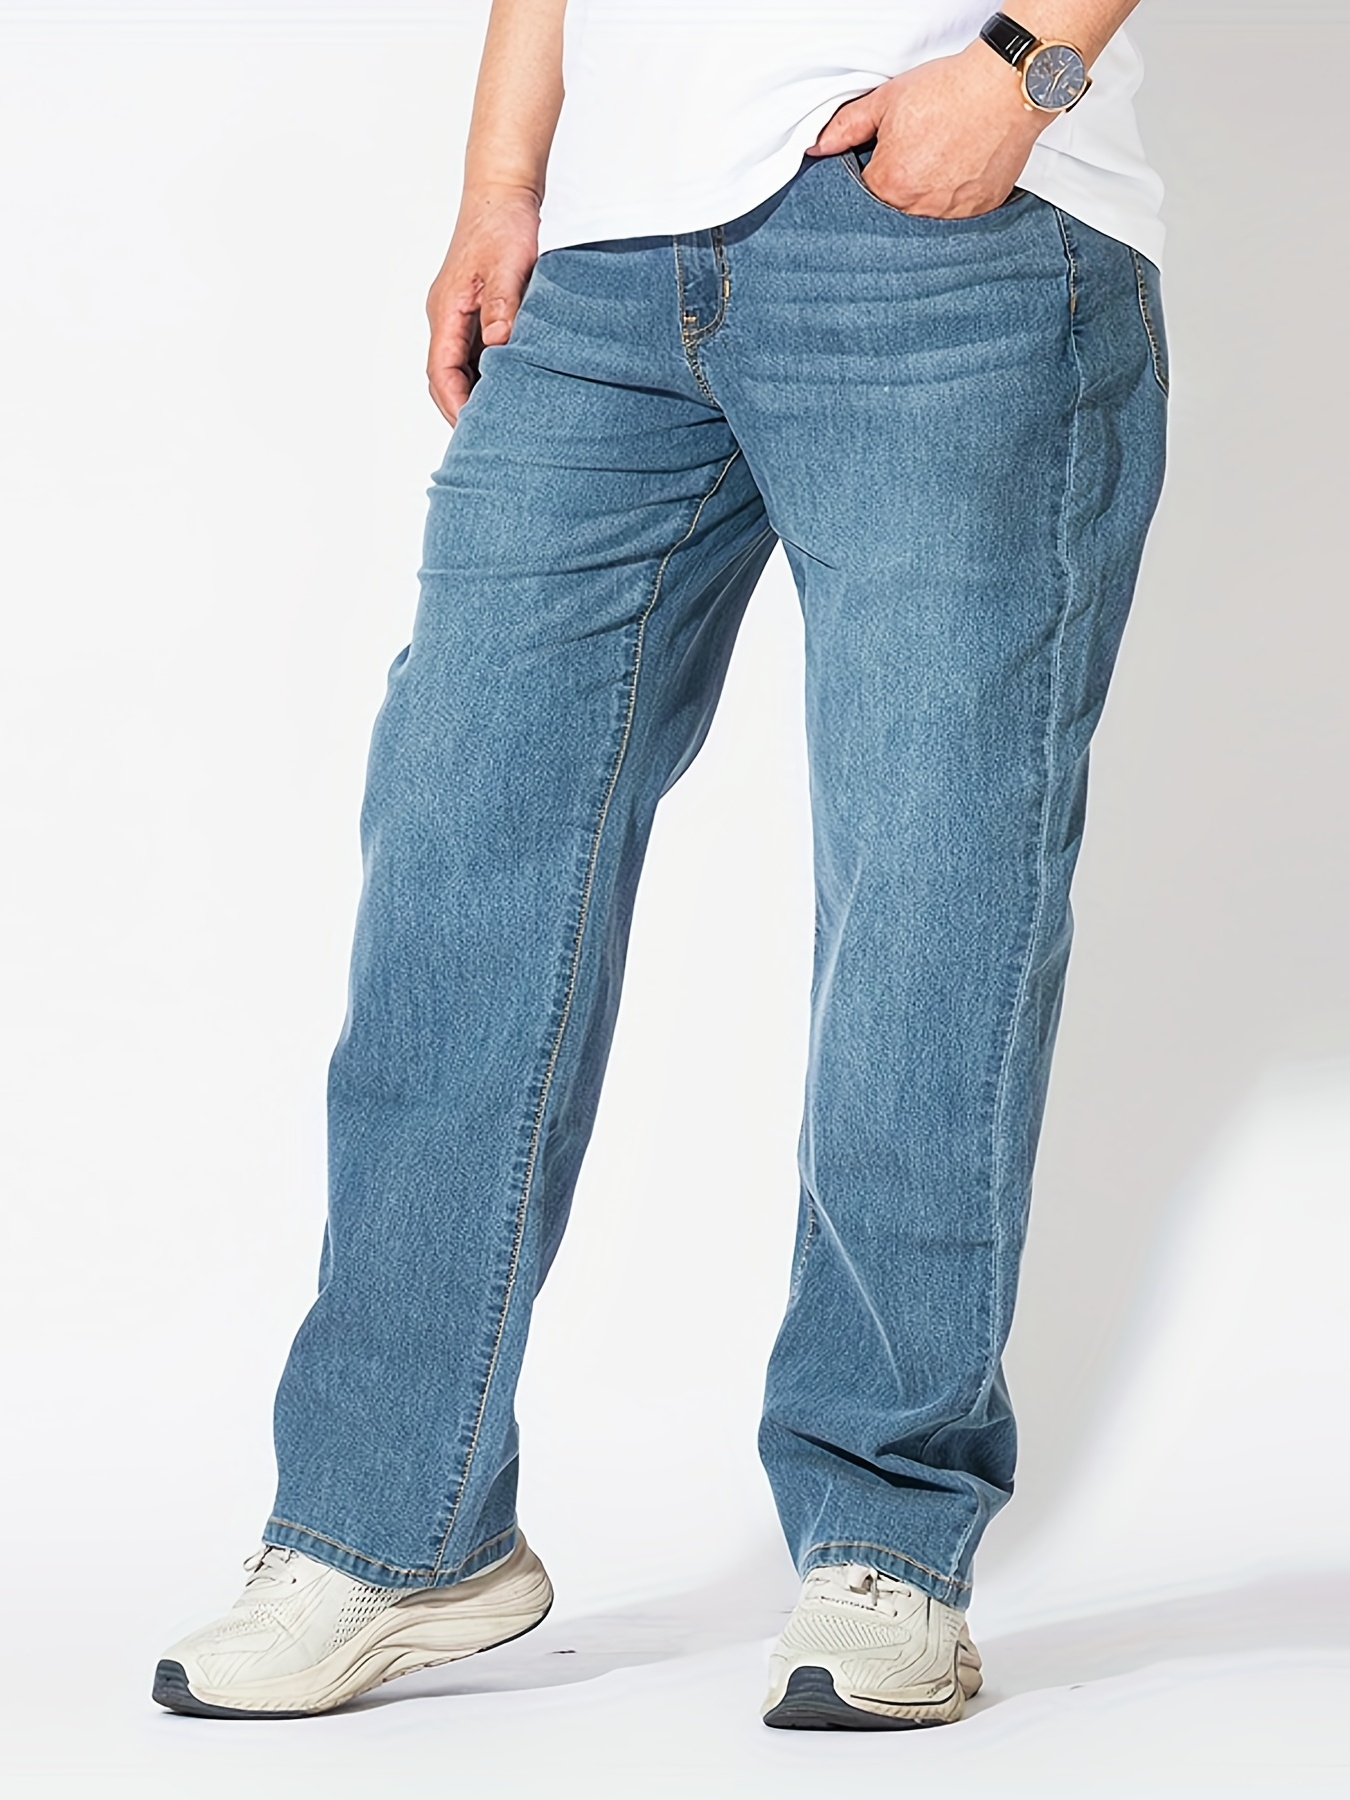 hombres skinny no ripper jeans cintura media pantalones vaqueros pantalones  hombres slim fit pantalones largos más tamaño